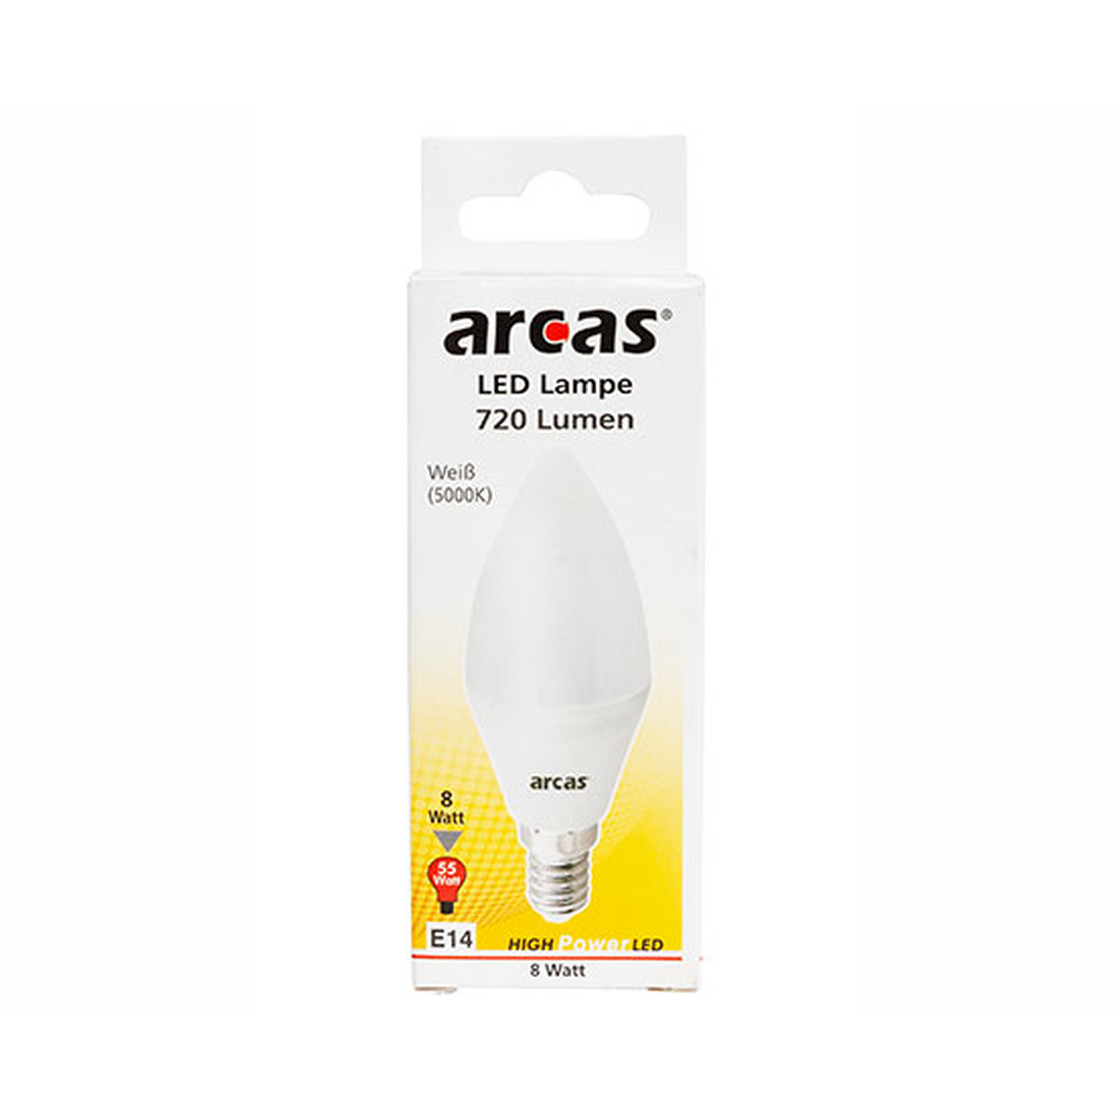 Arcas E14 LED Lampe Birne 8W 5000K 720 Lumen Tageslicht